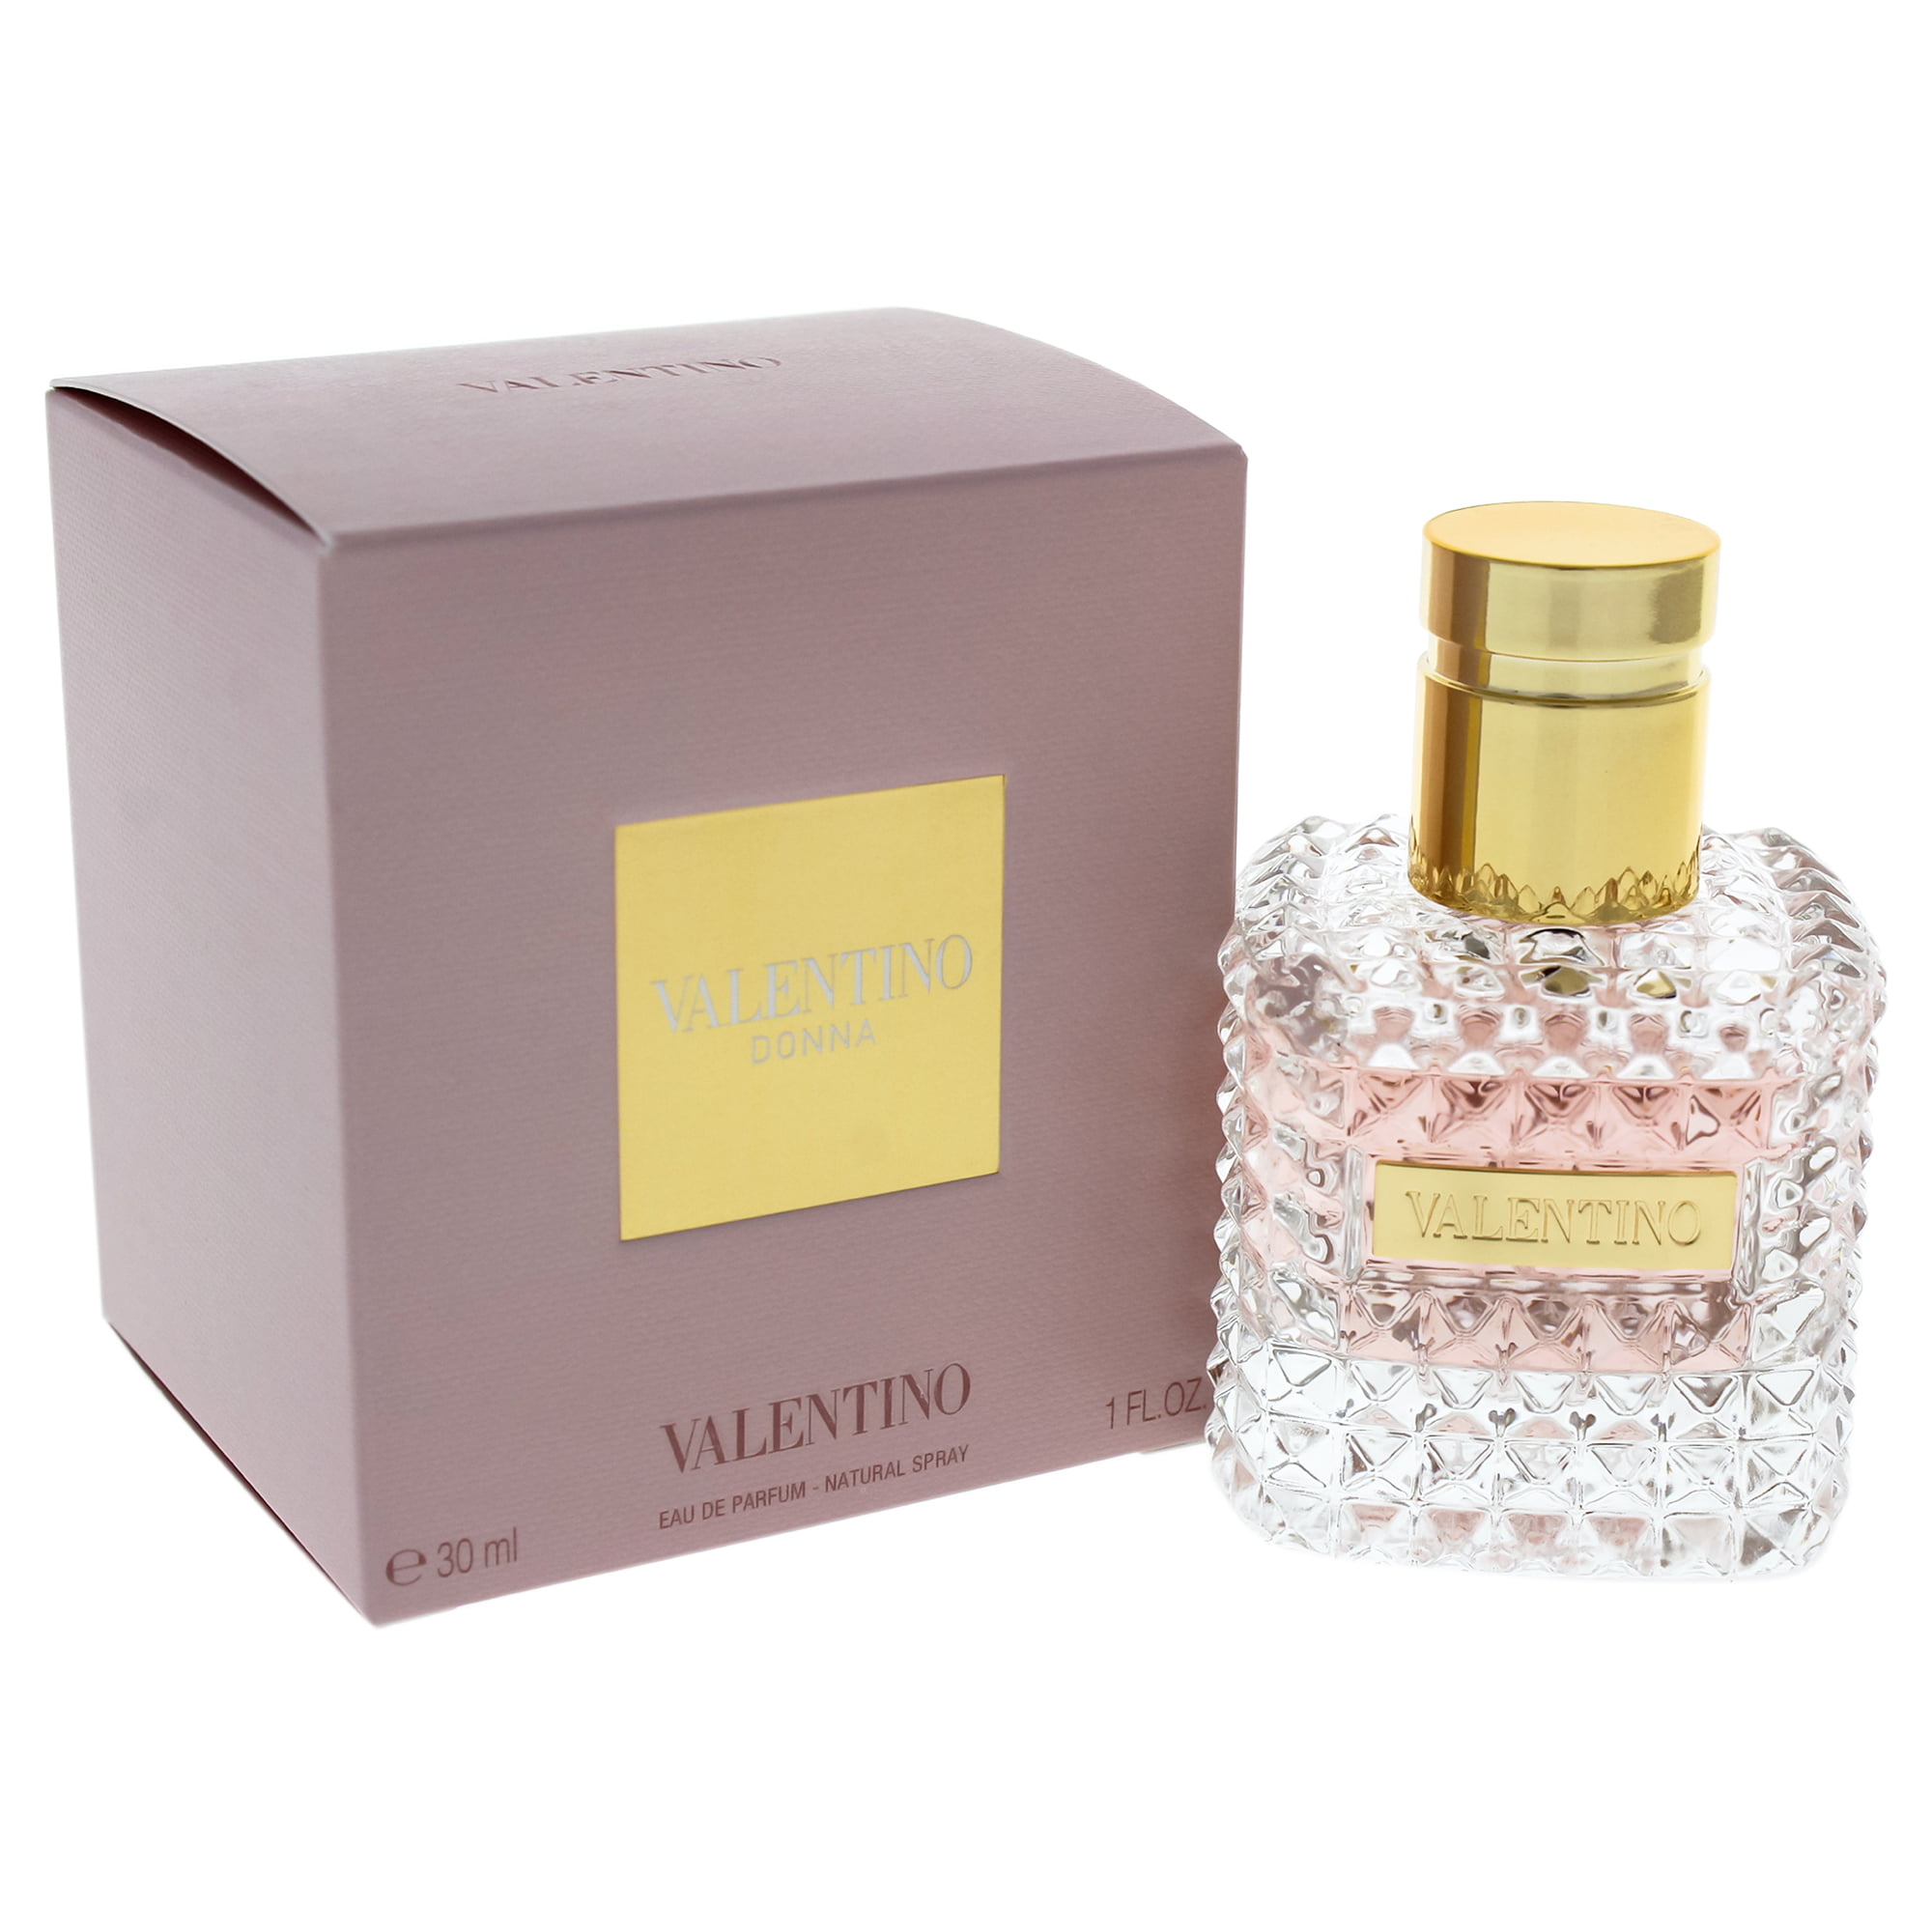 Valentino Eau Parfum Perfume for Women, 1 Oz Mini & Travel -